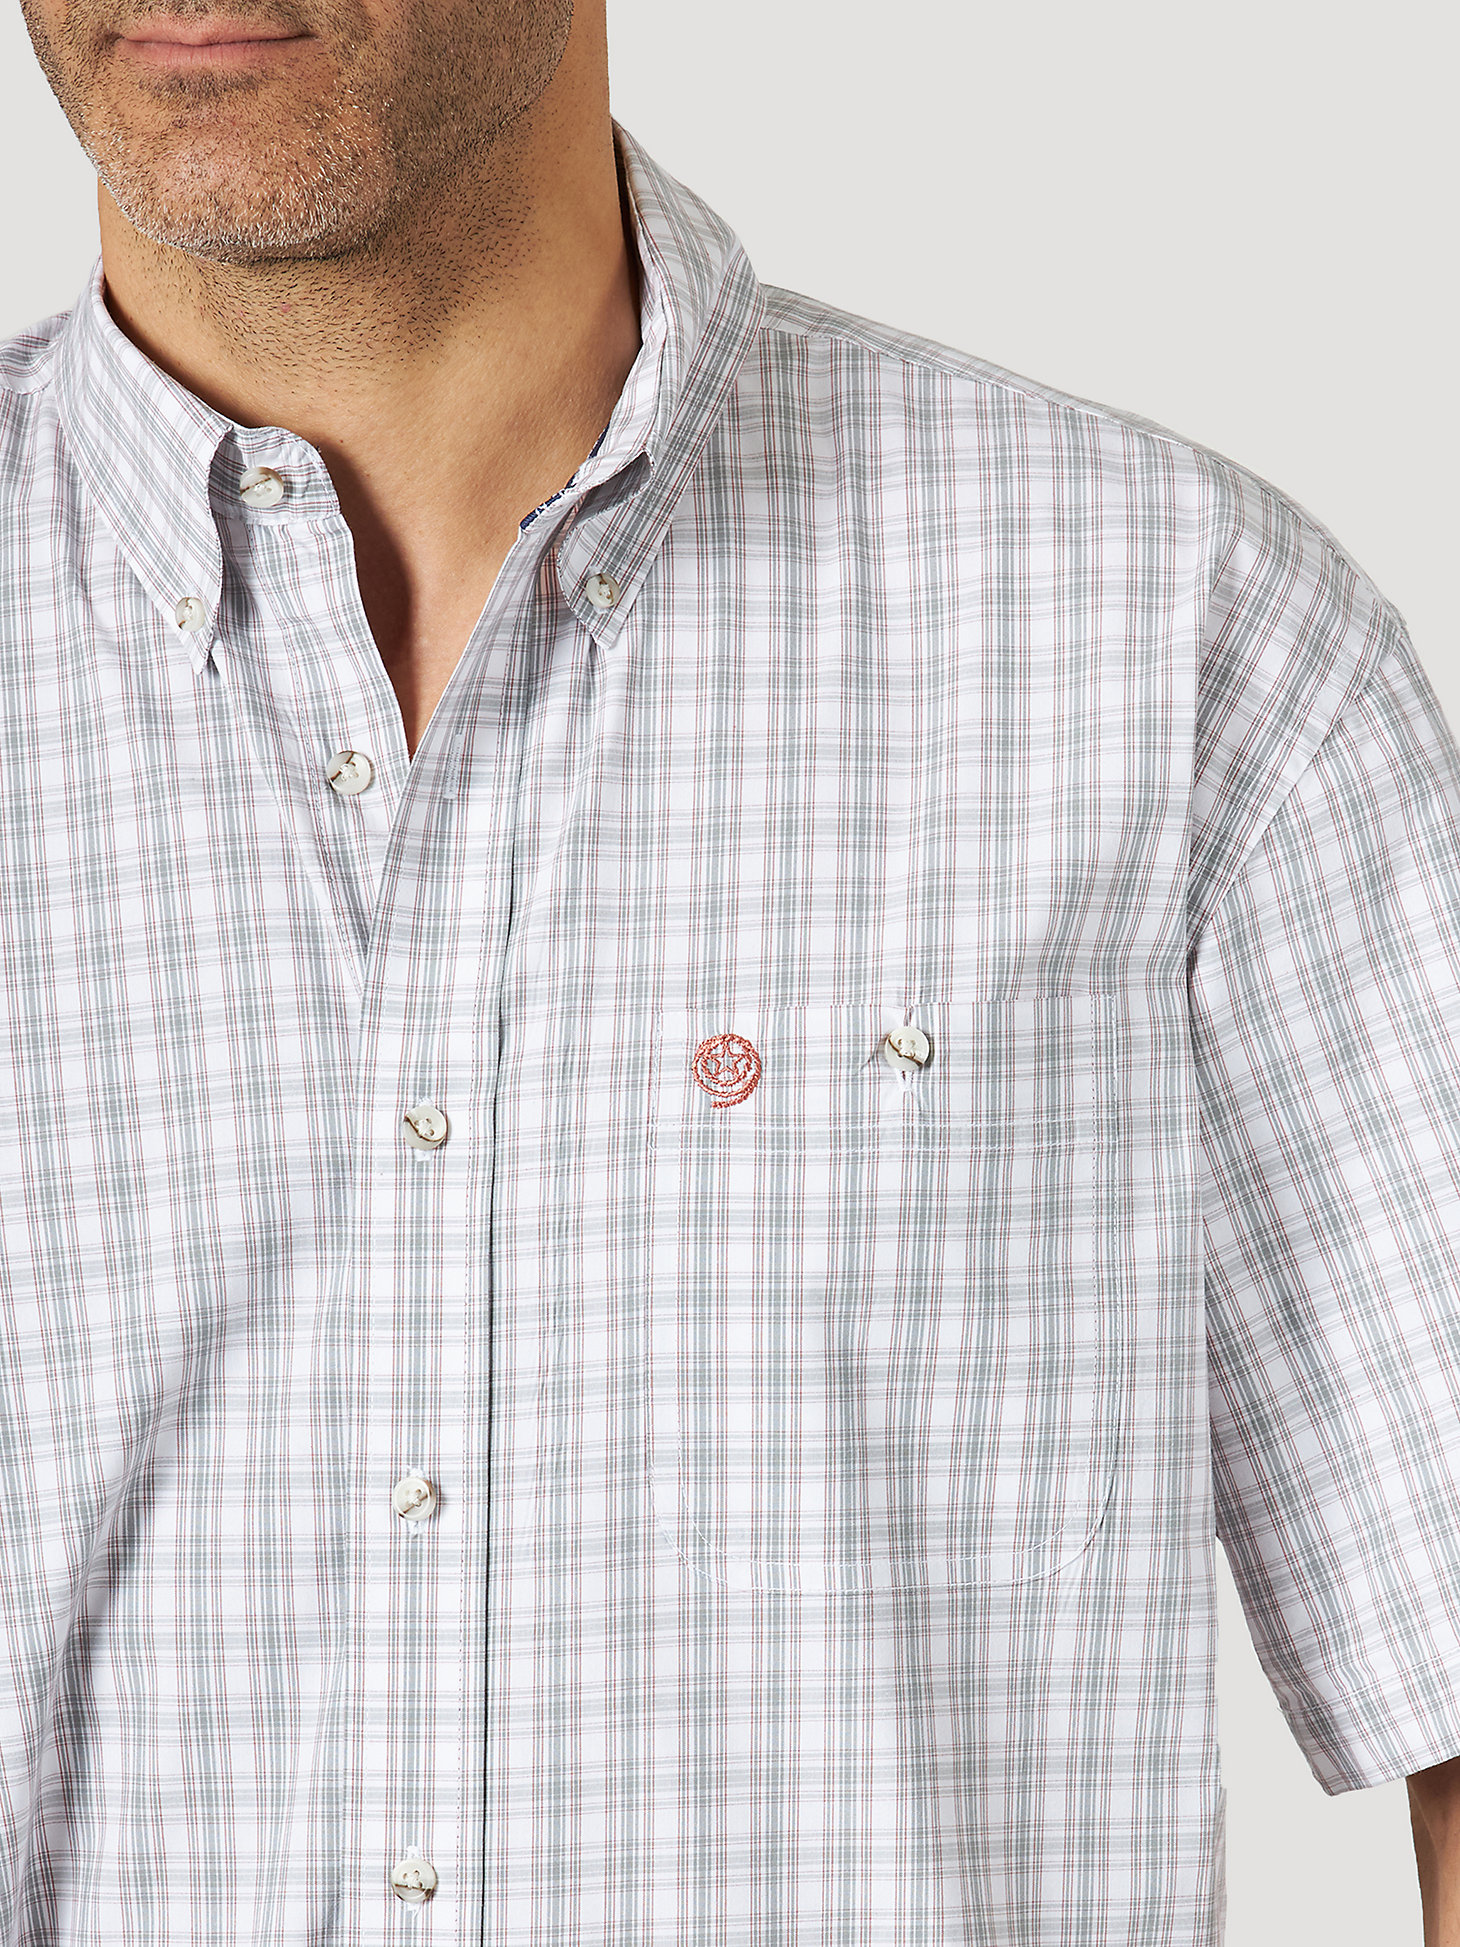 Men's George Strait Short Sleeve 1 Pocket Button Down Plaid Shirt in Rose Cloud alternative view 2